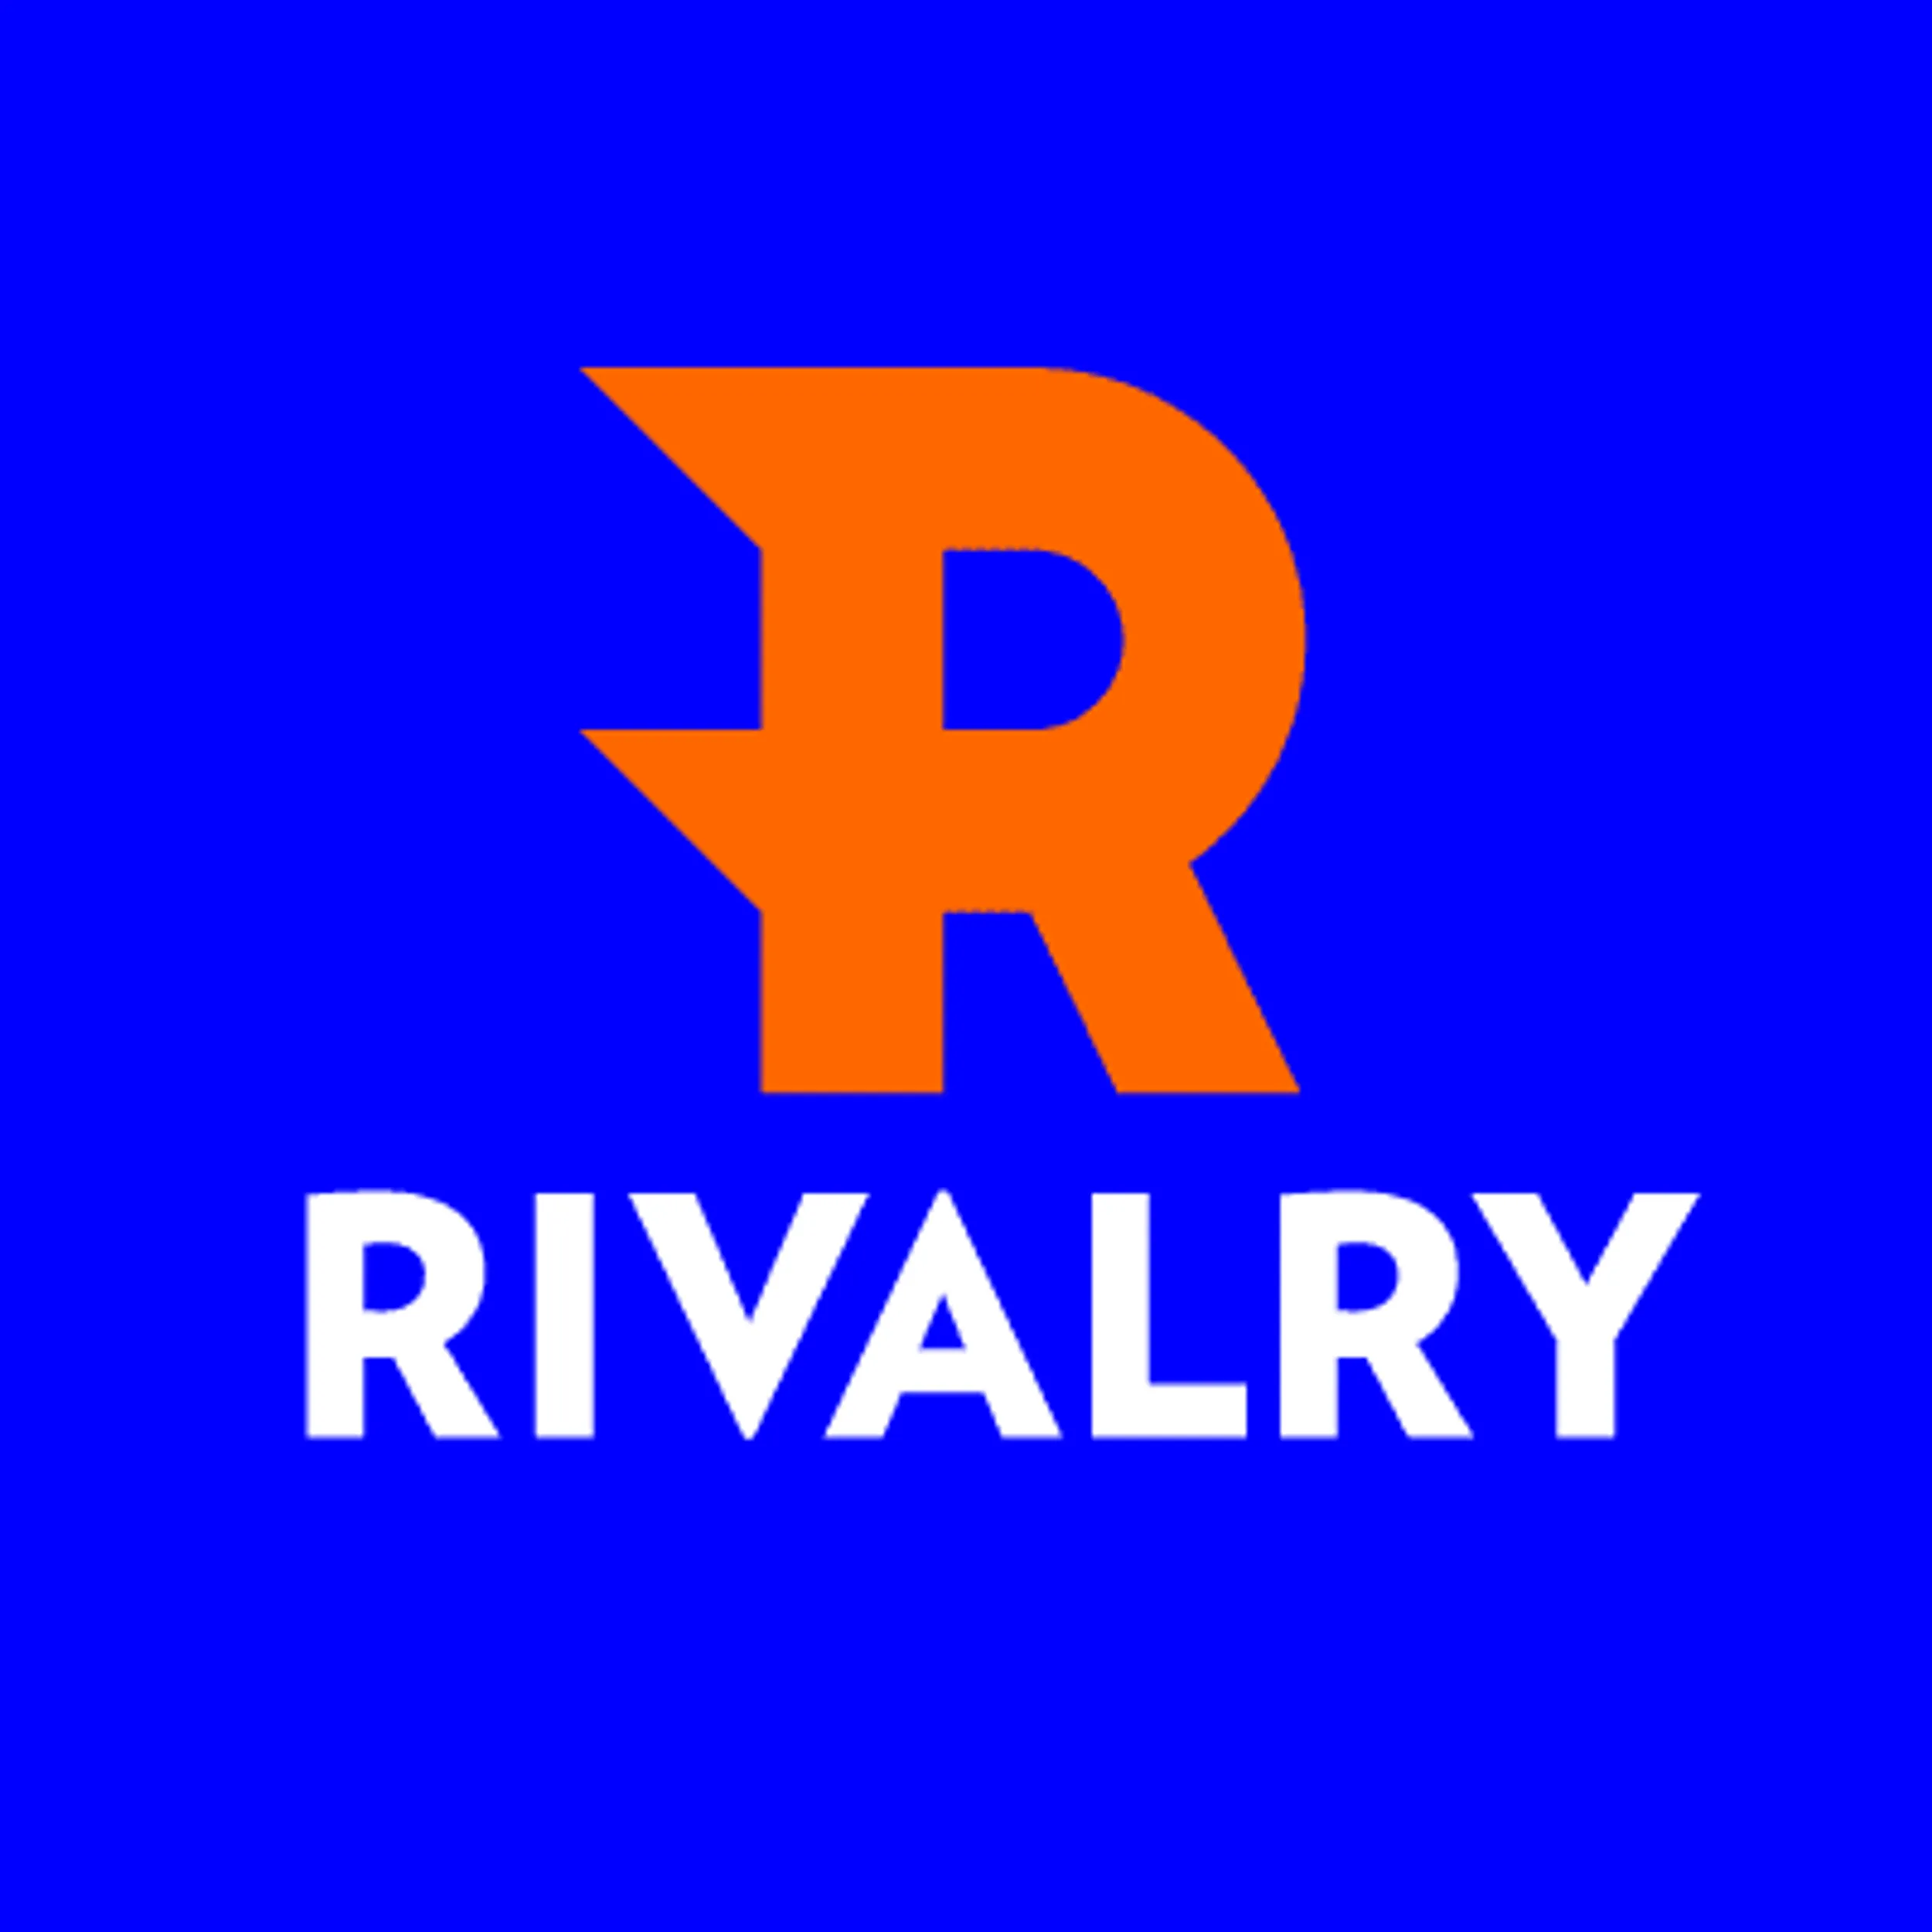 Rivalry logo blue orange